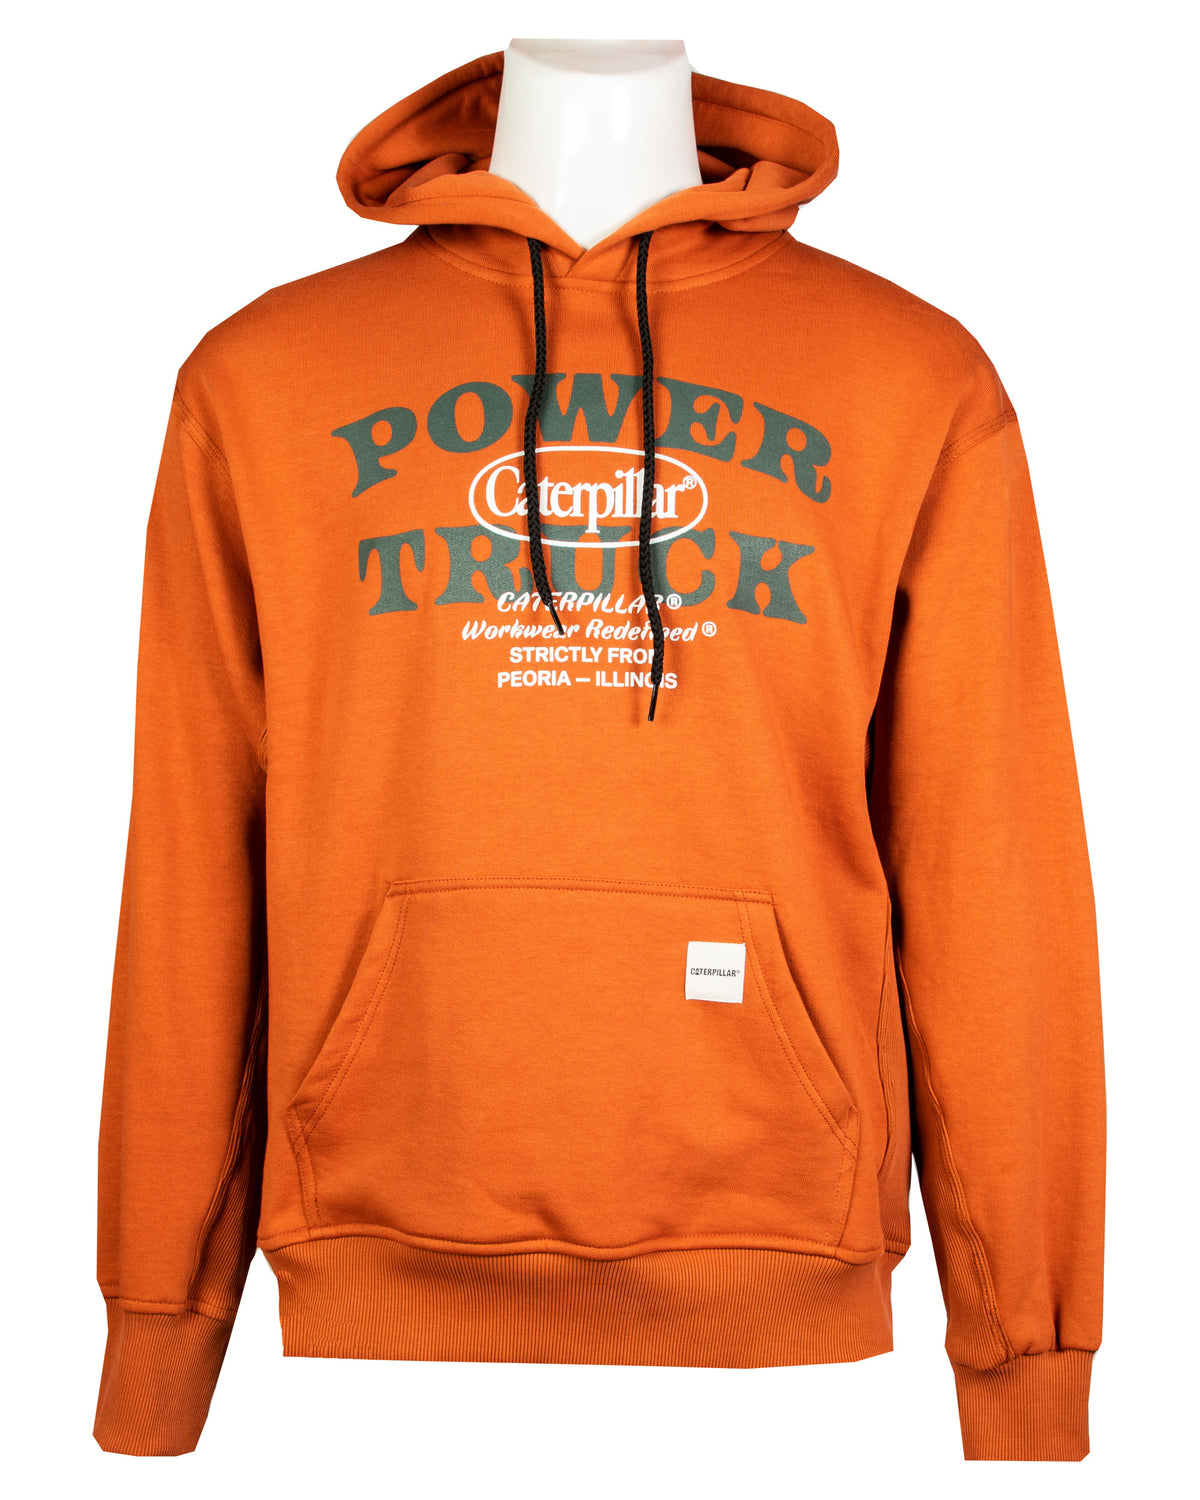 Man Cat Power Truck Hoodie Orange